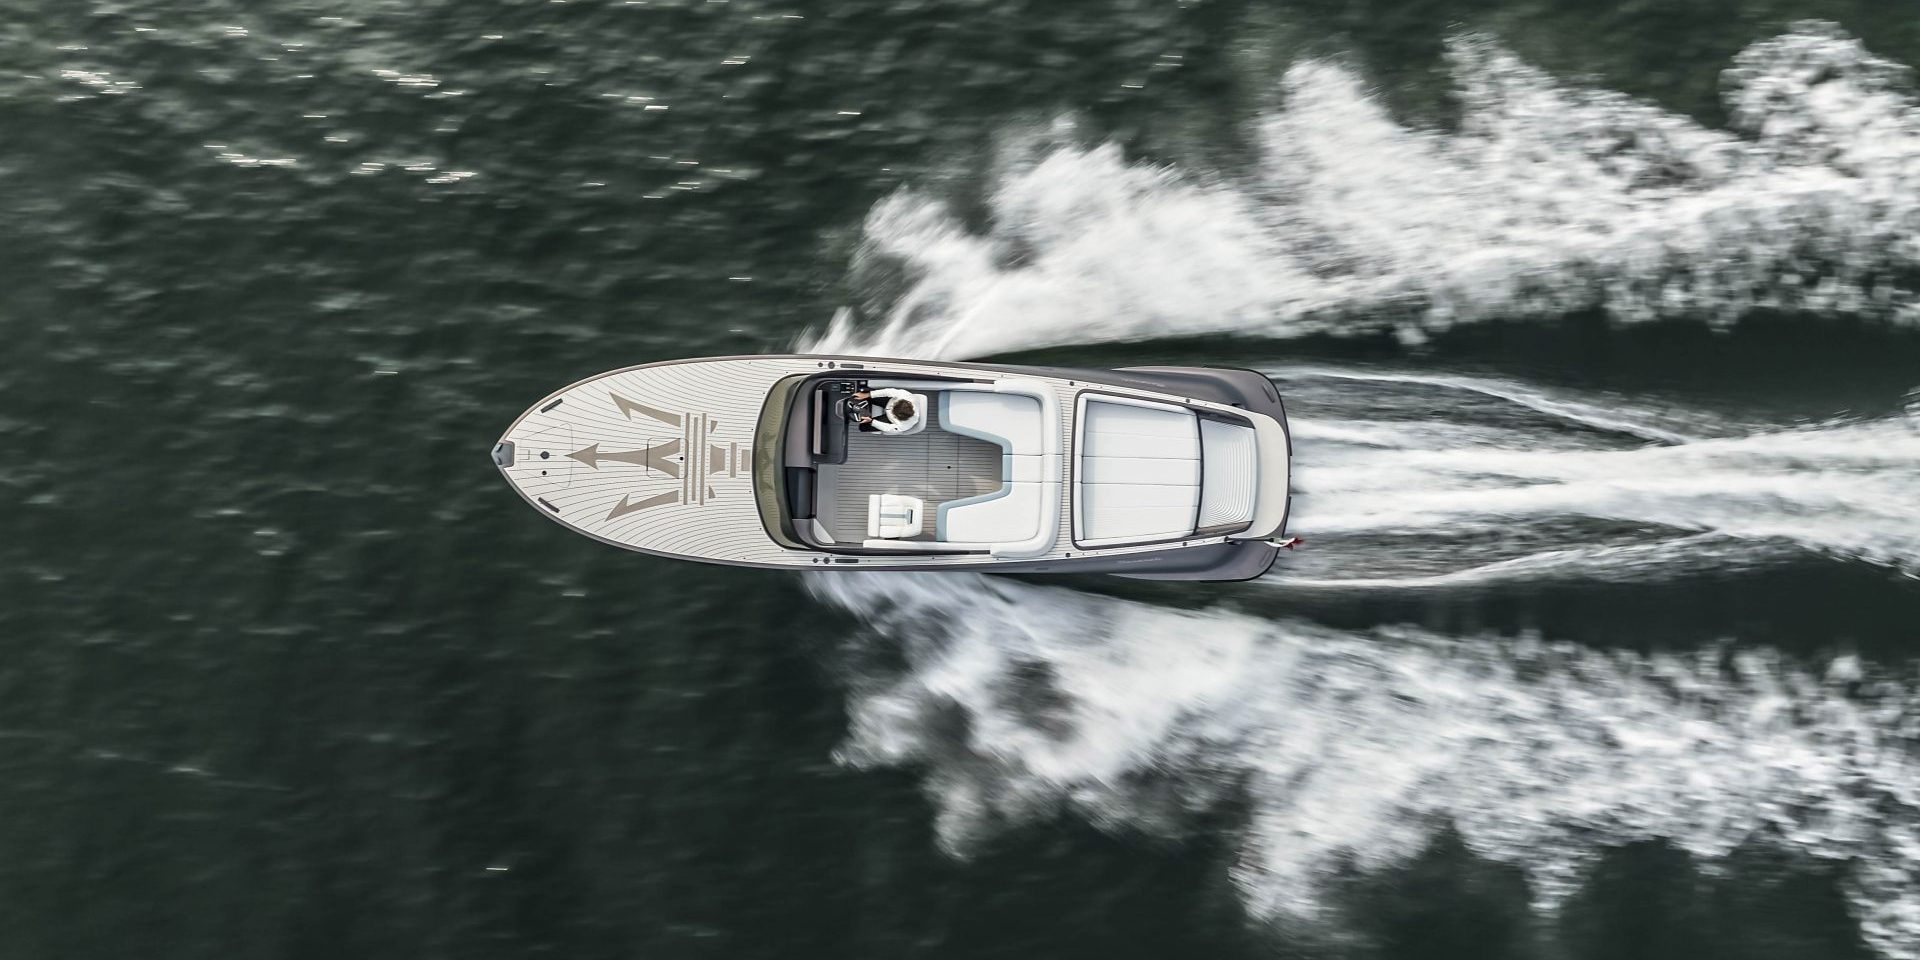 MaseratiTRIDENTEluxuryall-electricpowerboatatLakeMaggiore(1)